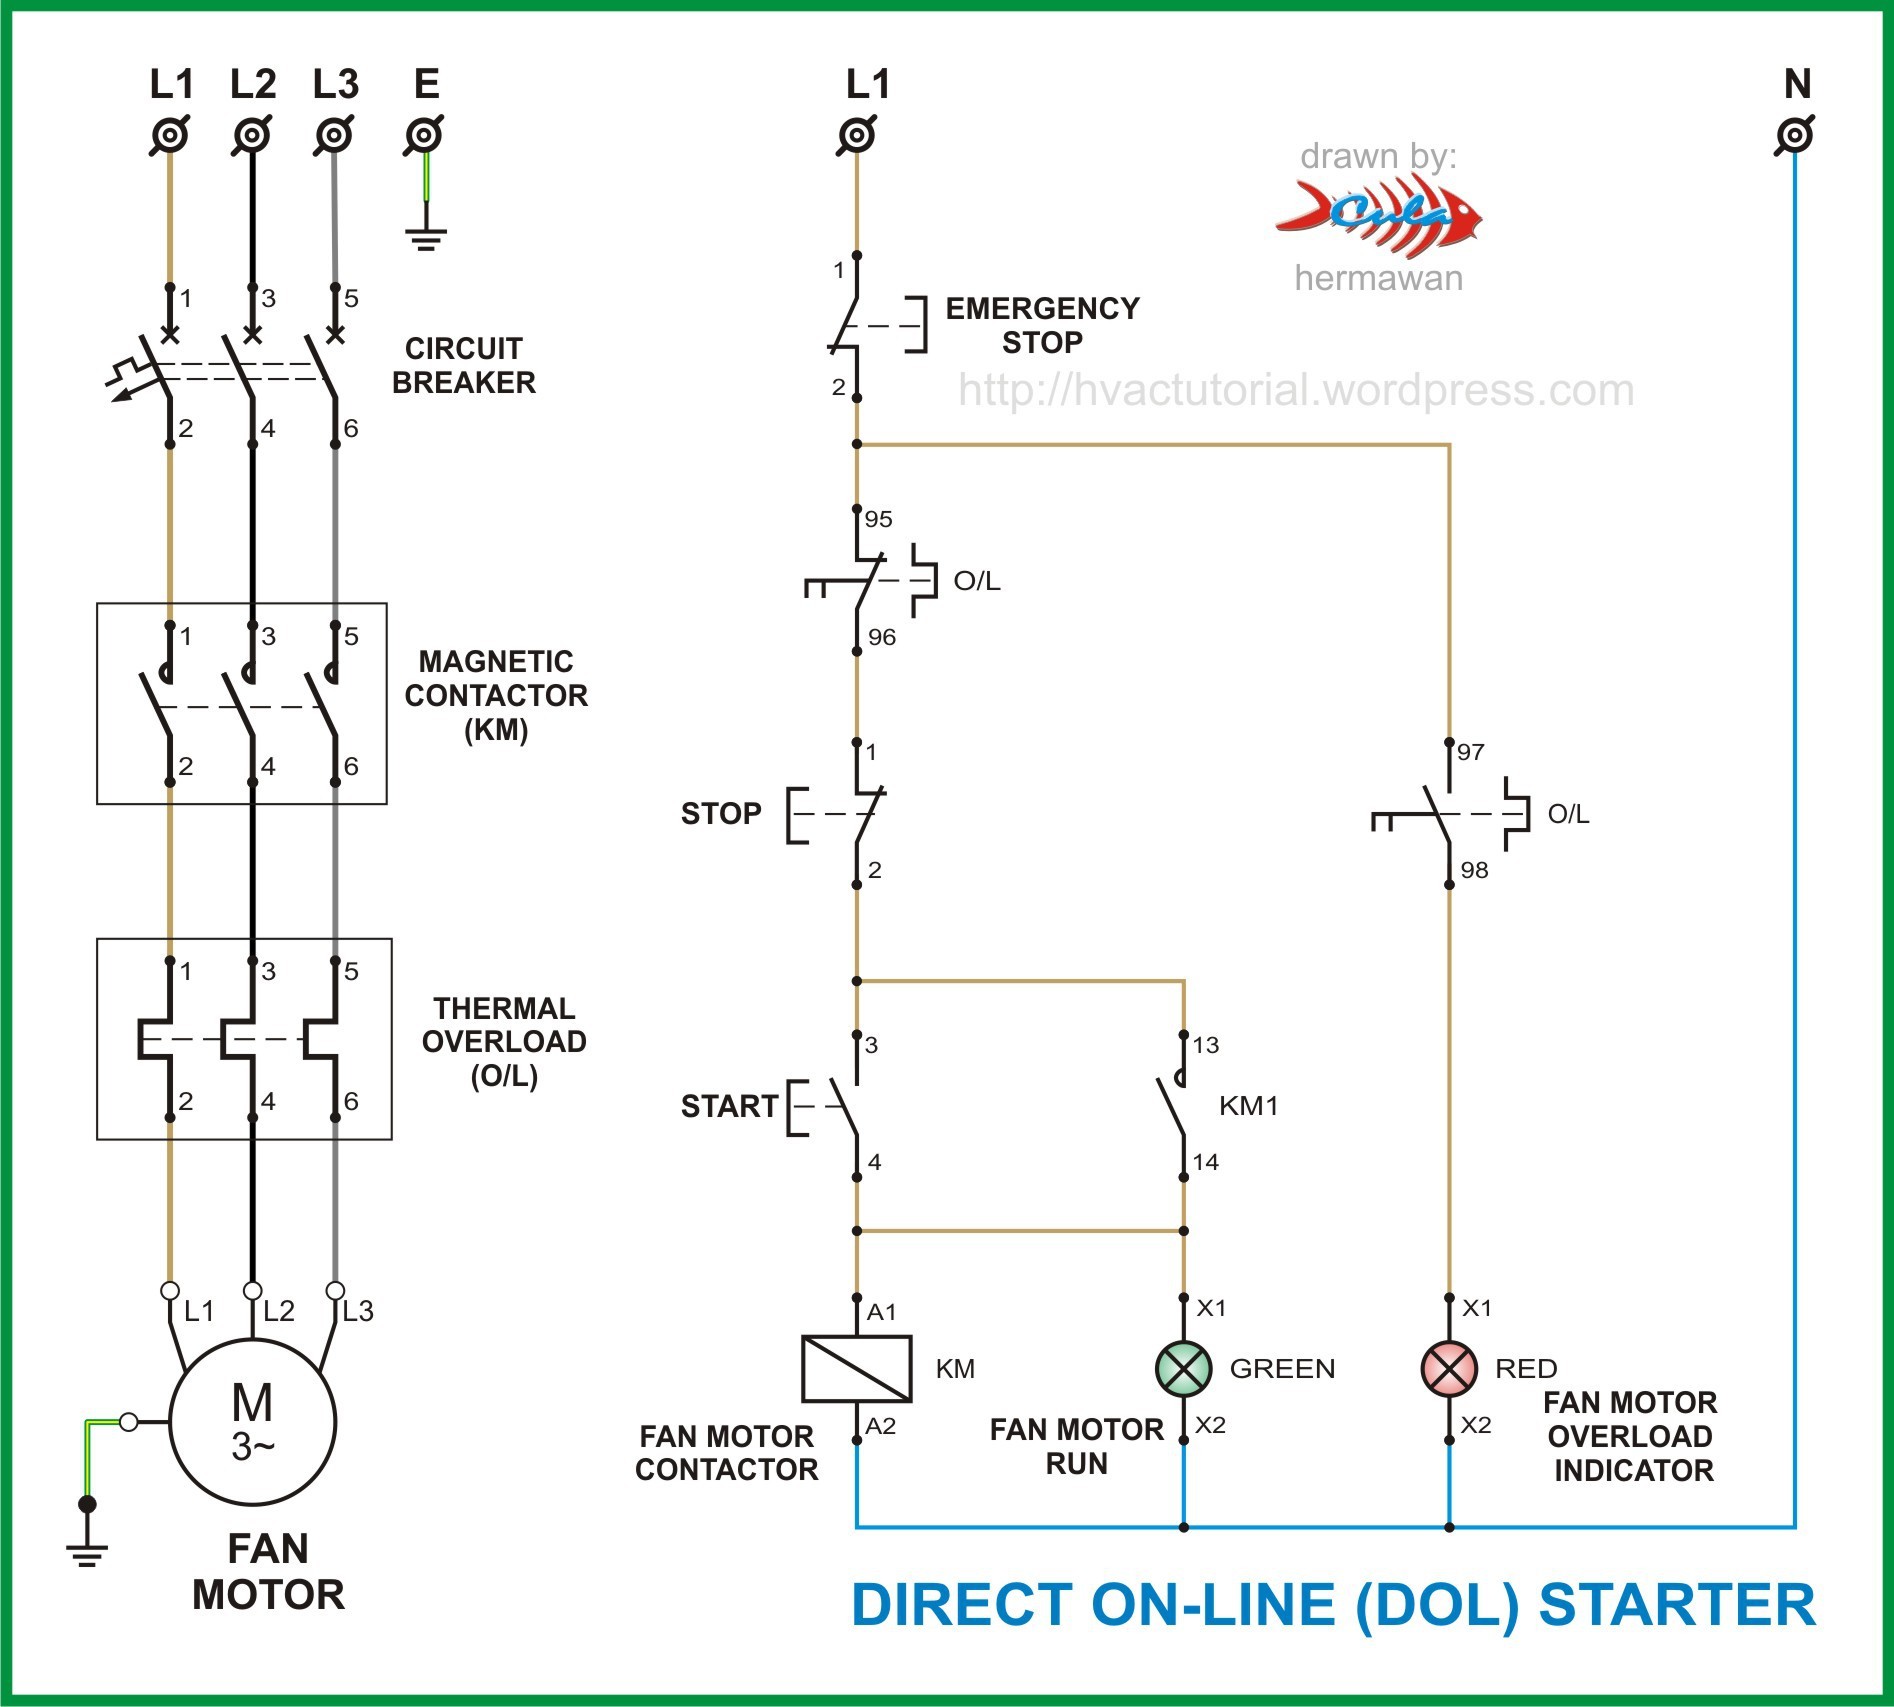 Motor Control Circuit Diagram Pdf, Electrical Wiring Circuit Diagram Pdf